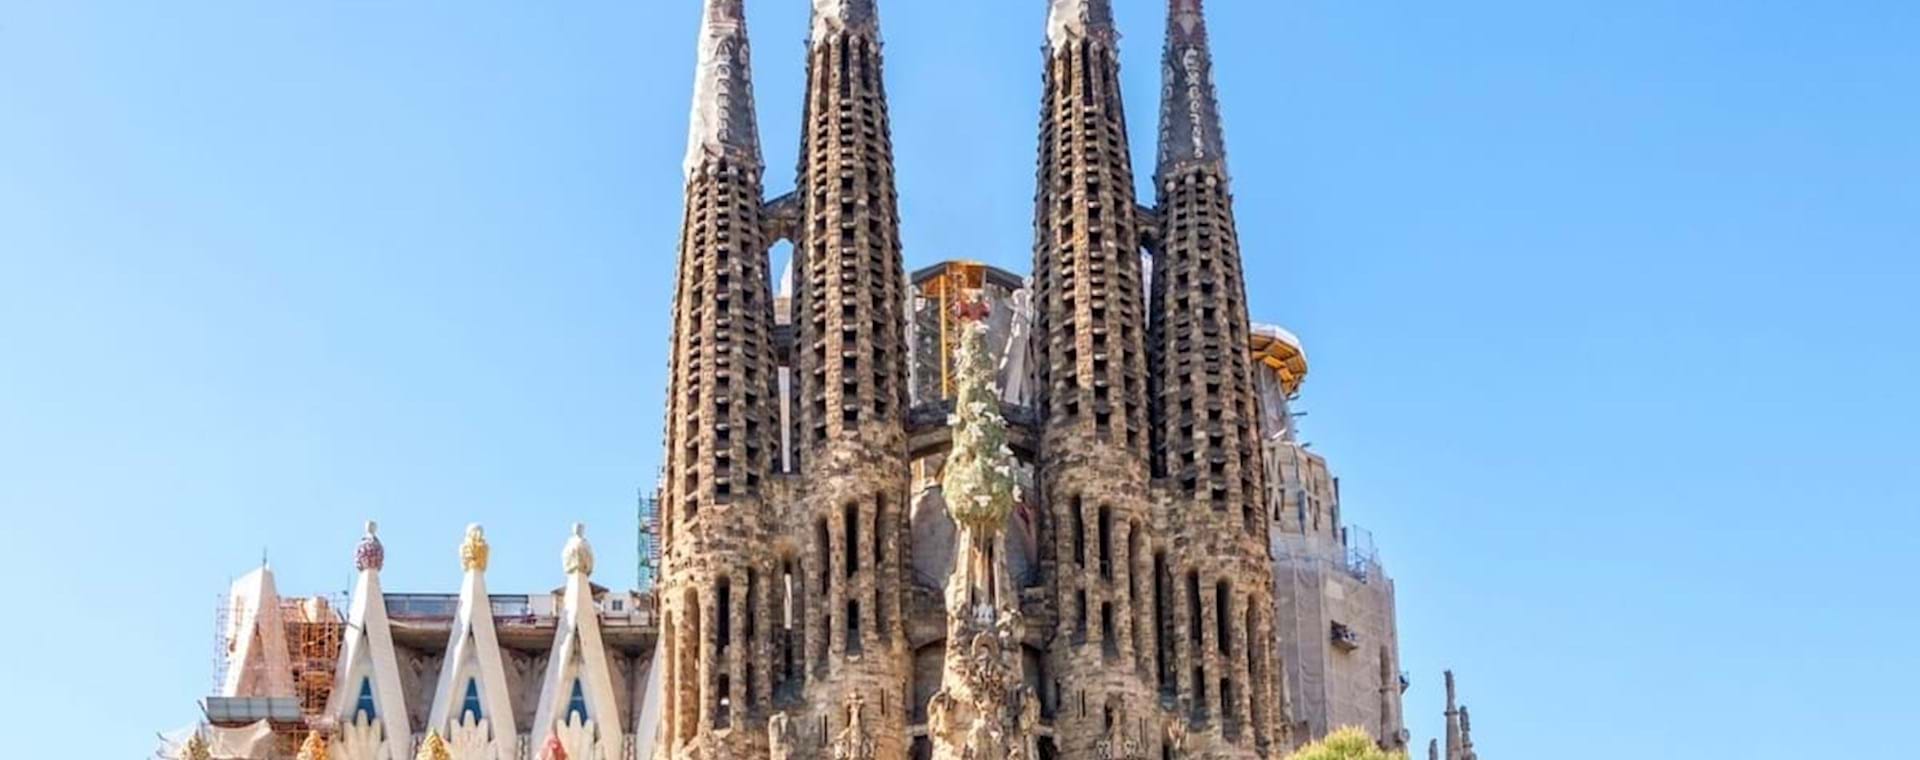 Impressive Sagrada Familia Towers made by Gaudi